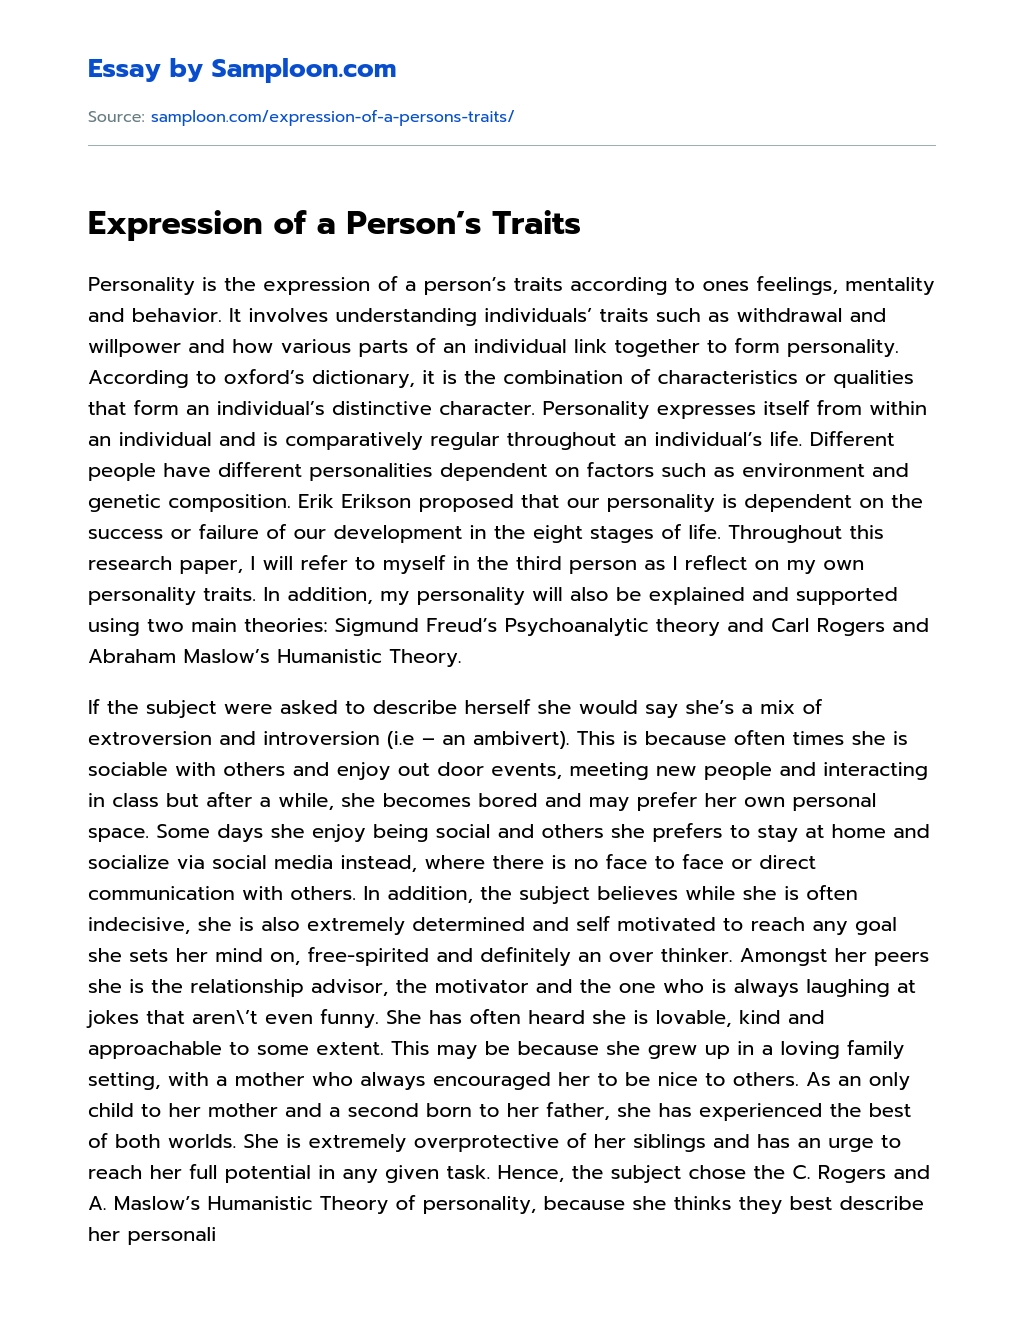 Expression of a Person’s Traits Argumentative Essay essay